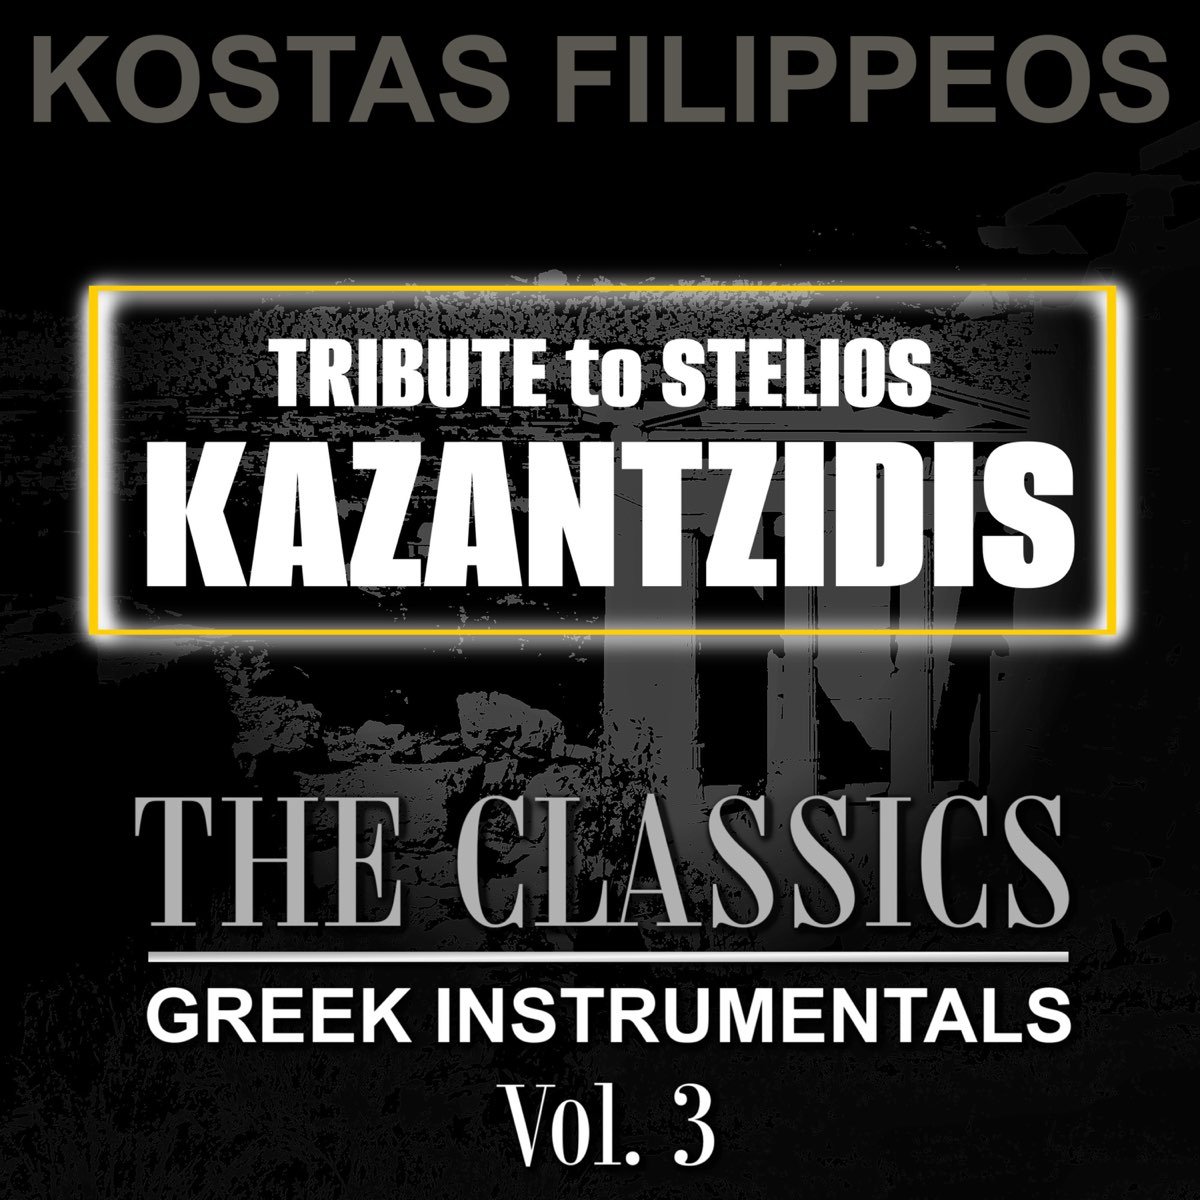 Tribute To Stelios Kazantzidis: The Classics Greek Instrumentals Vol. 3 -  Album by Kostas Filippeos - Apple Music